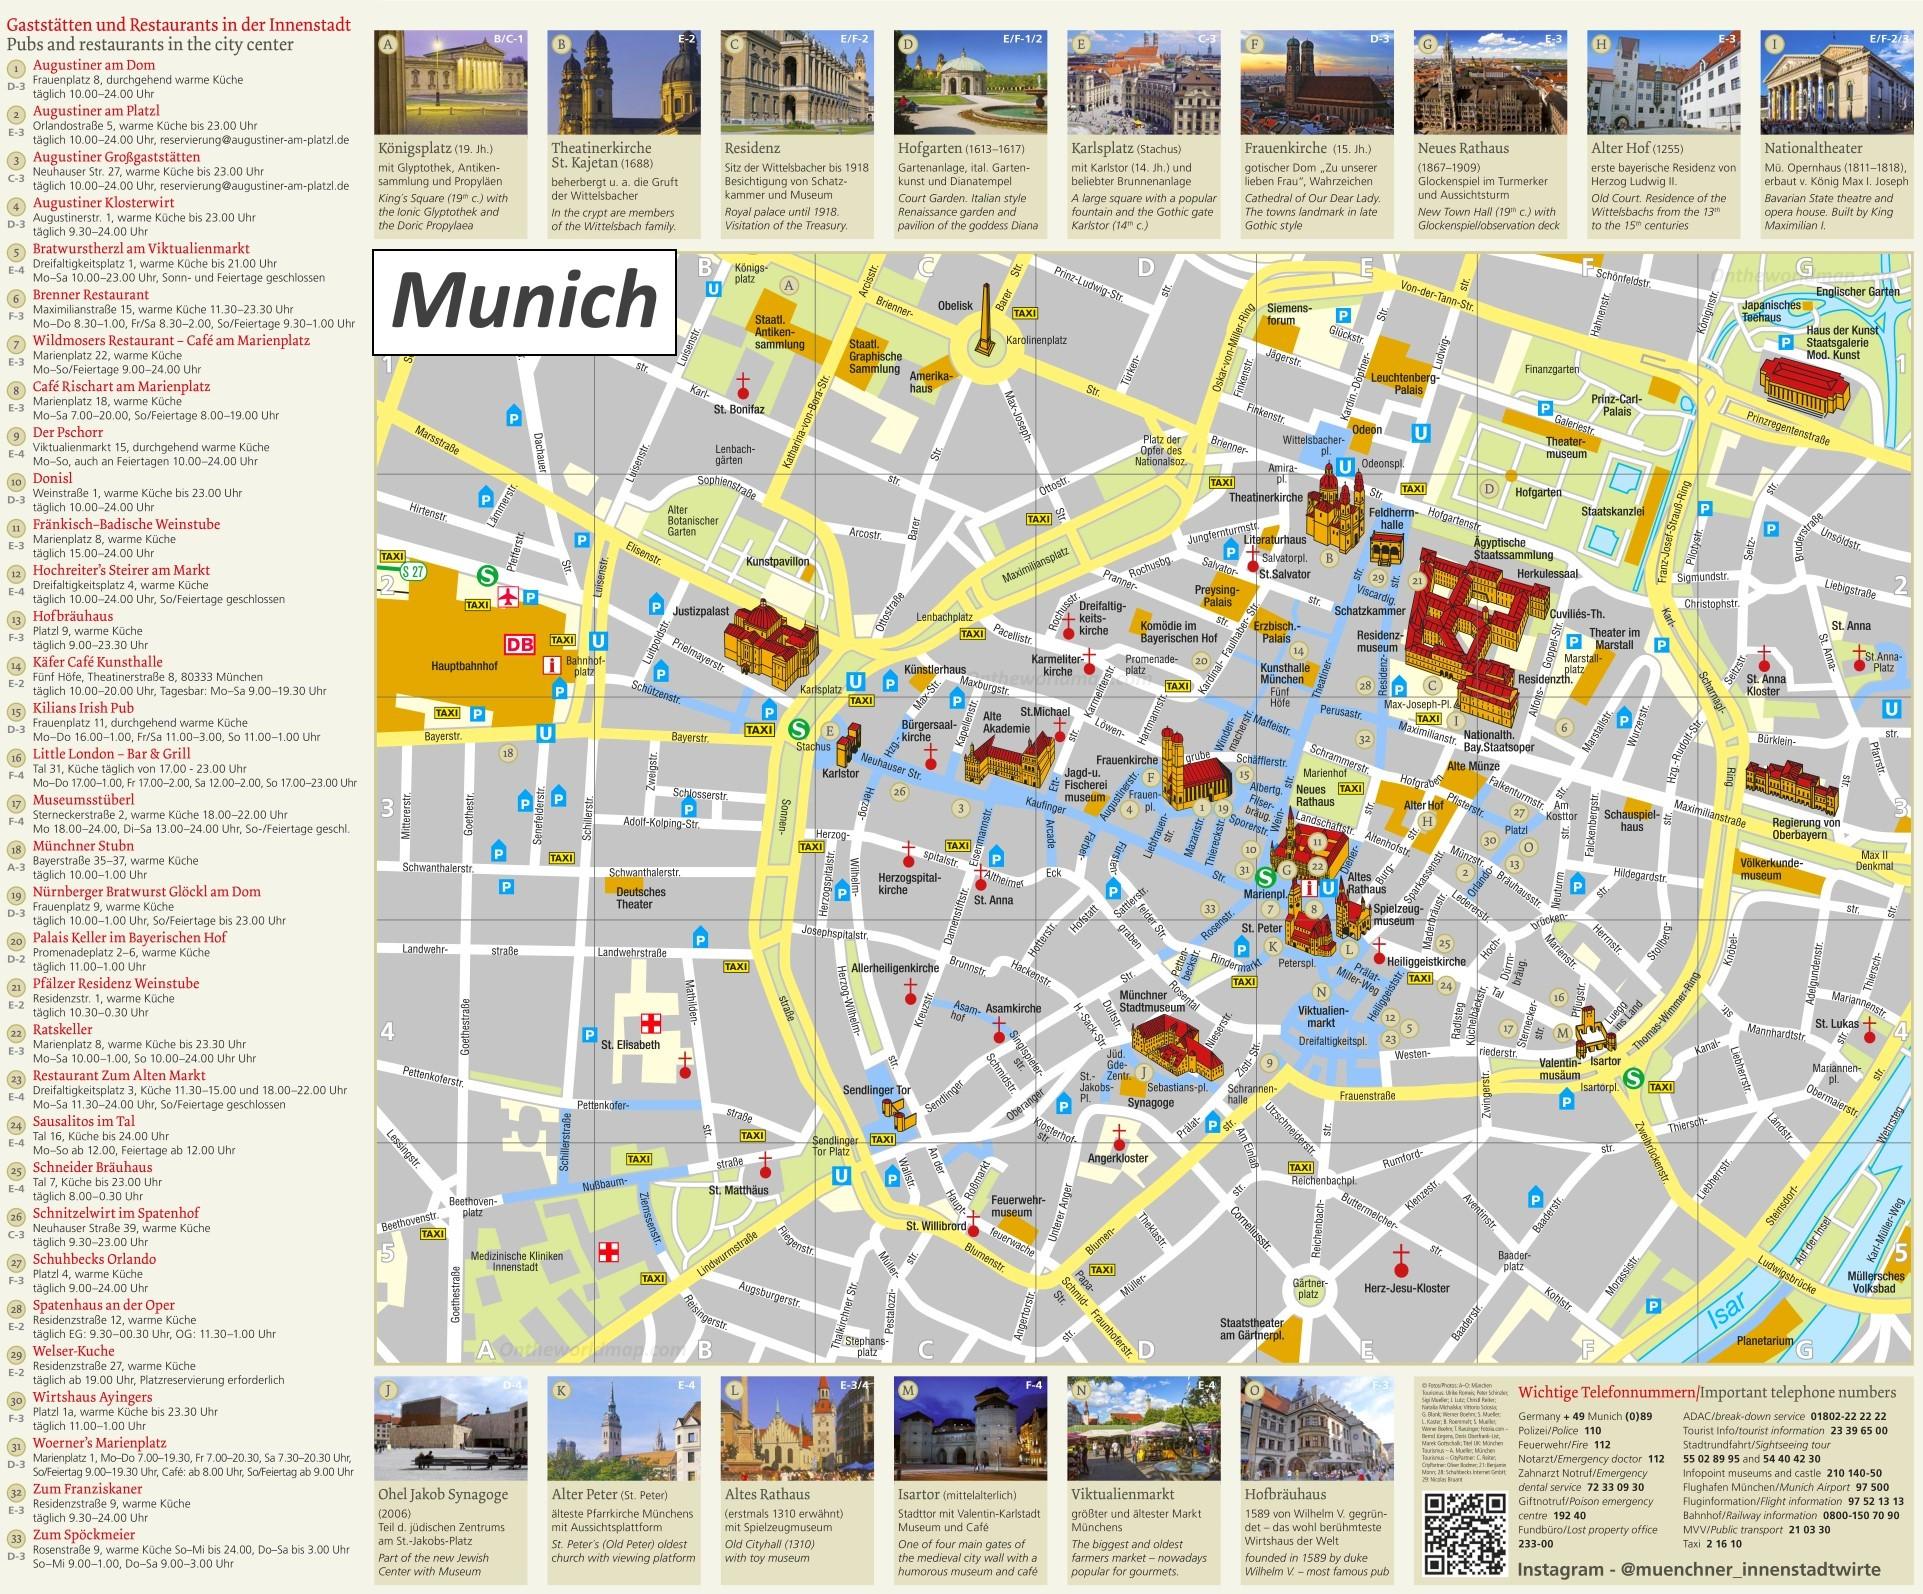 monaco tourist map pdf